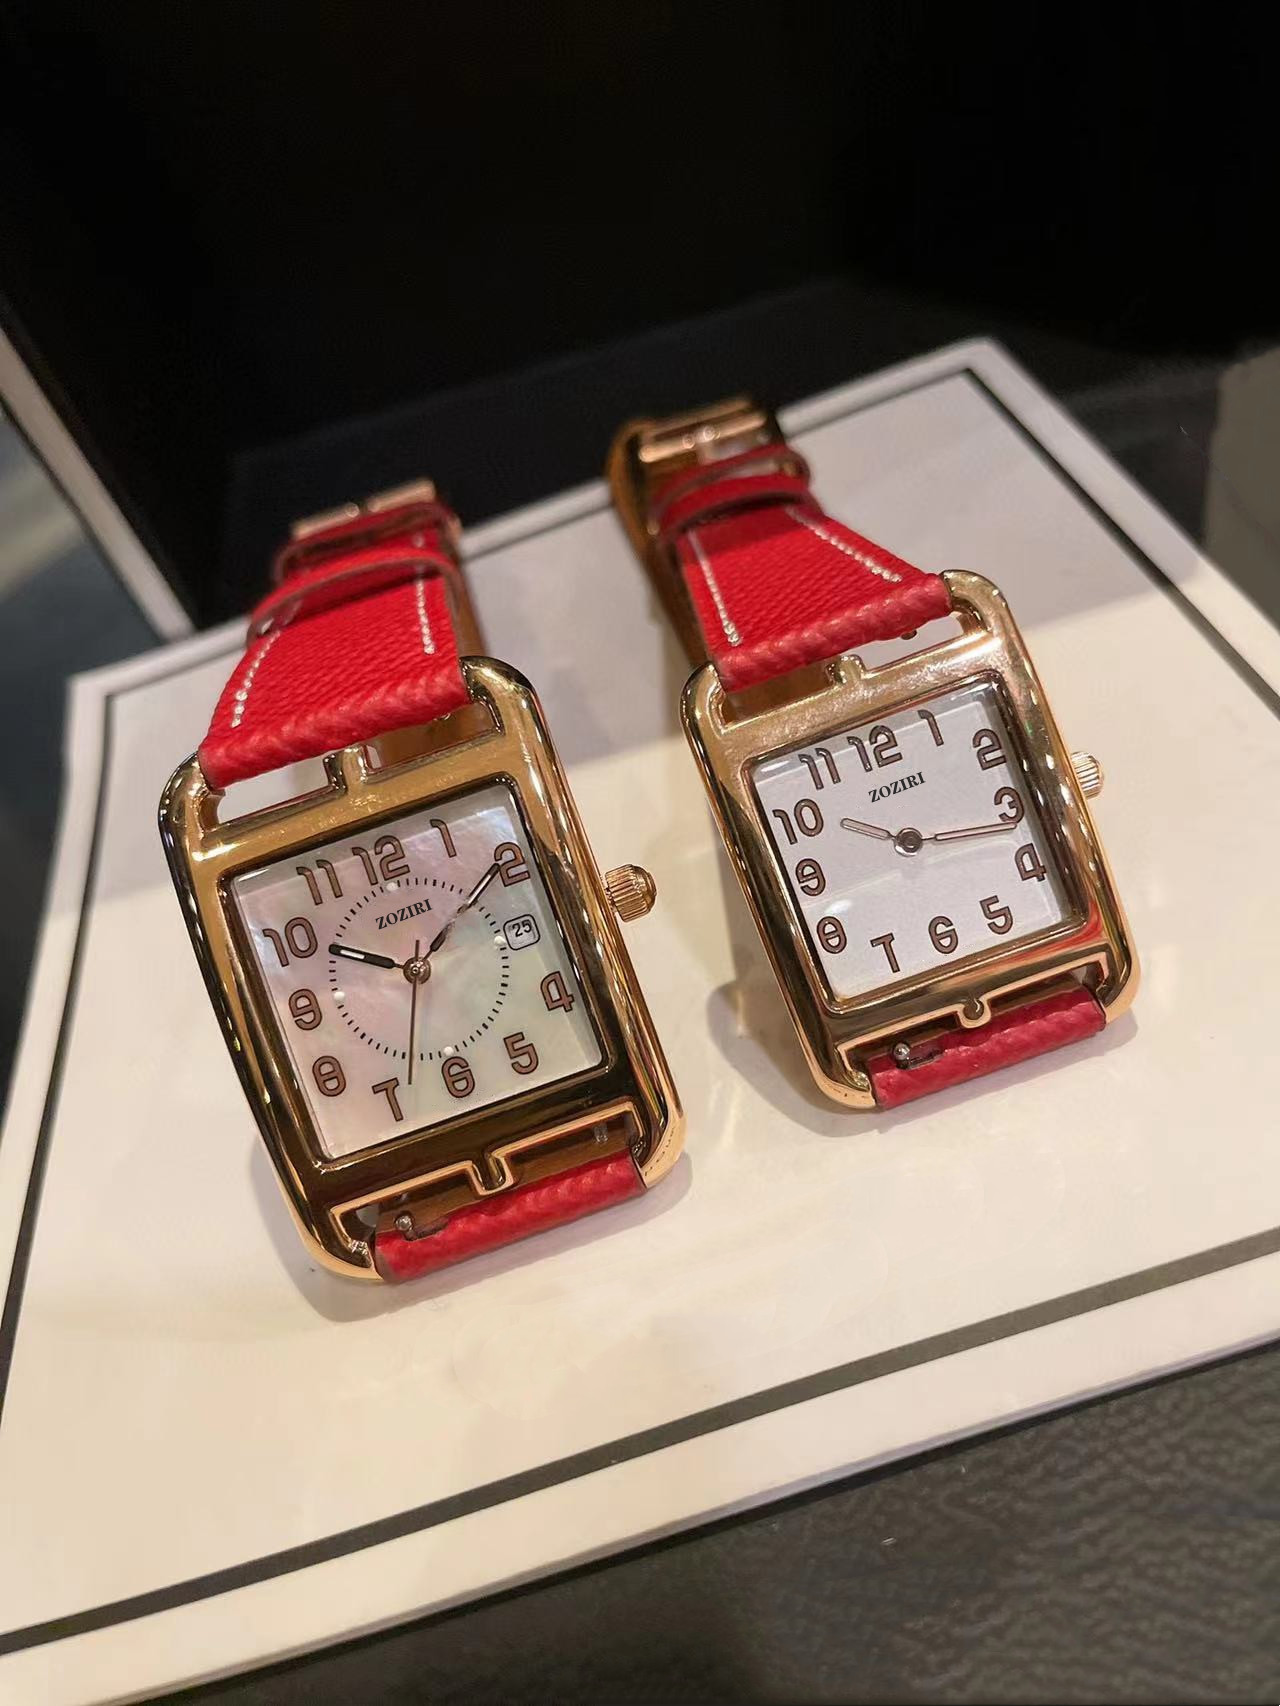 29mm 23mm Paar Quarz Watch Cape Cod Frauen Männer digitale Nummer echtes Leder Armbanduhren Luxusmarkenzubehör